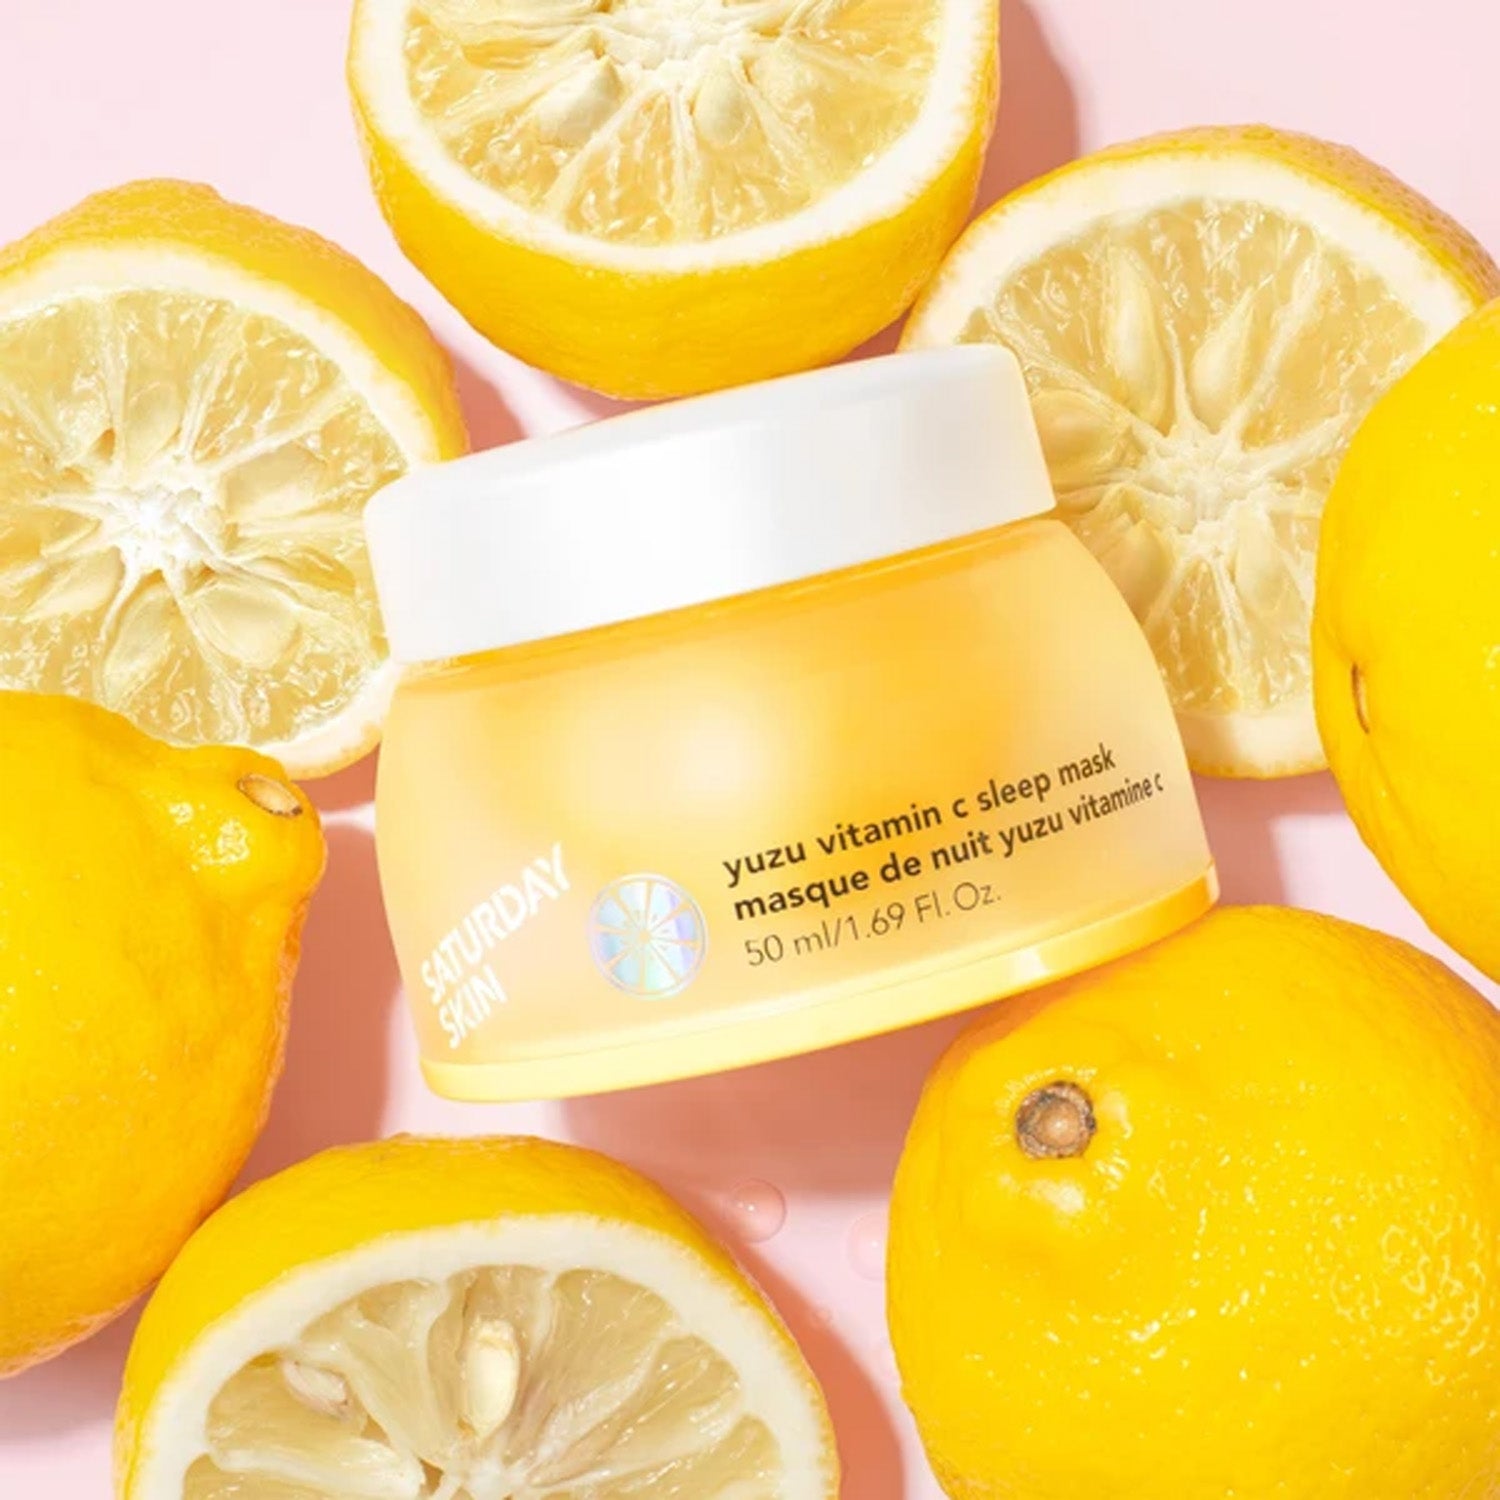 A jar of Saturday Skin Yuzu Vitamin C Sleep Mask surrounded by lemons